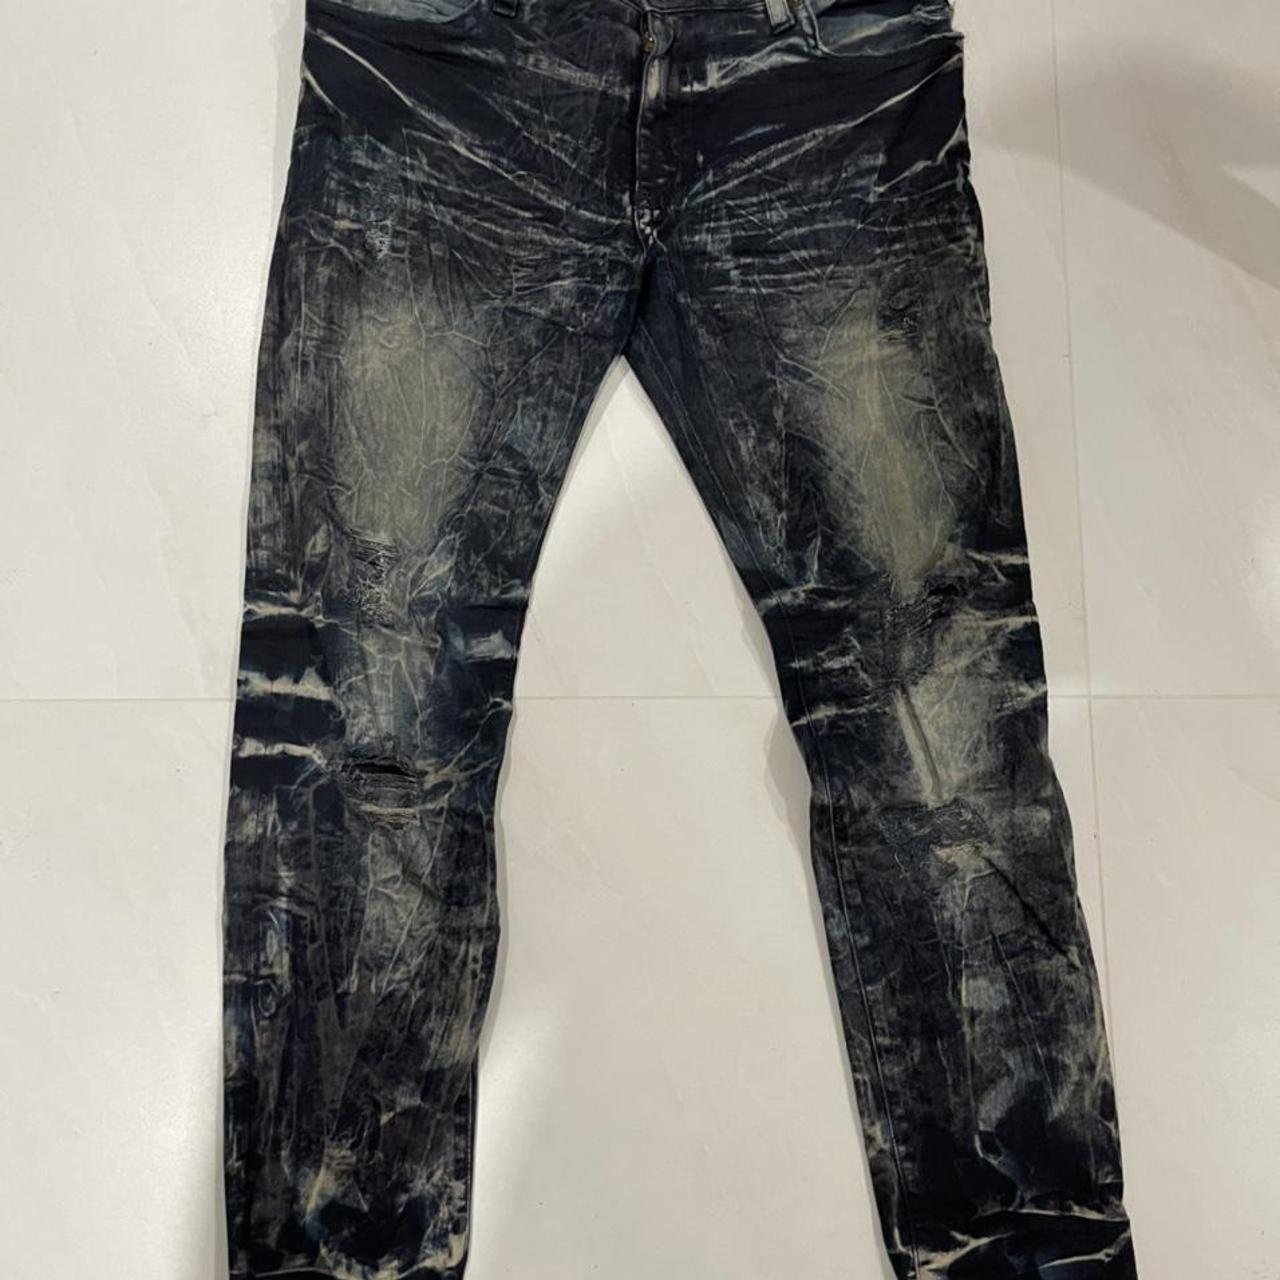 Robins jeans skinny jeans size 32 #denim #robinsjean... - Depop